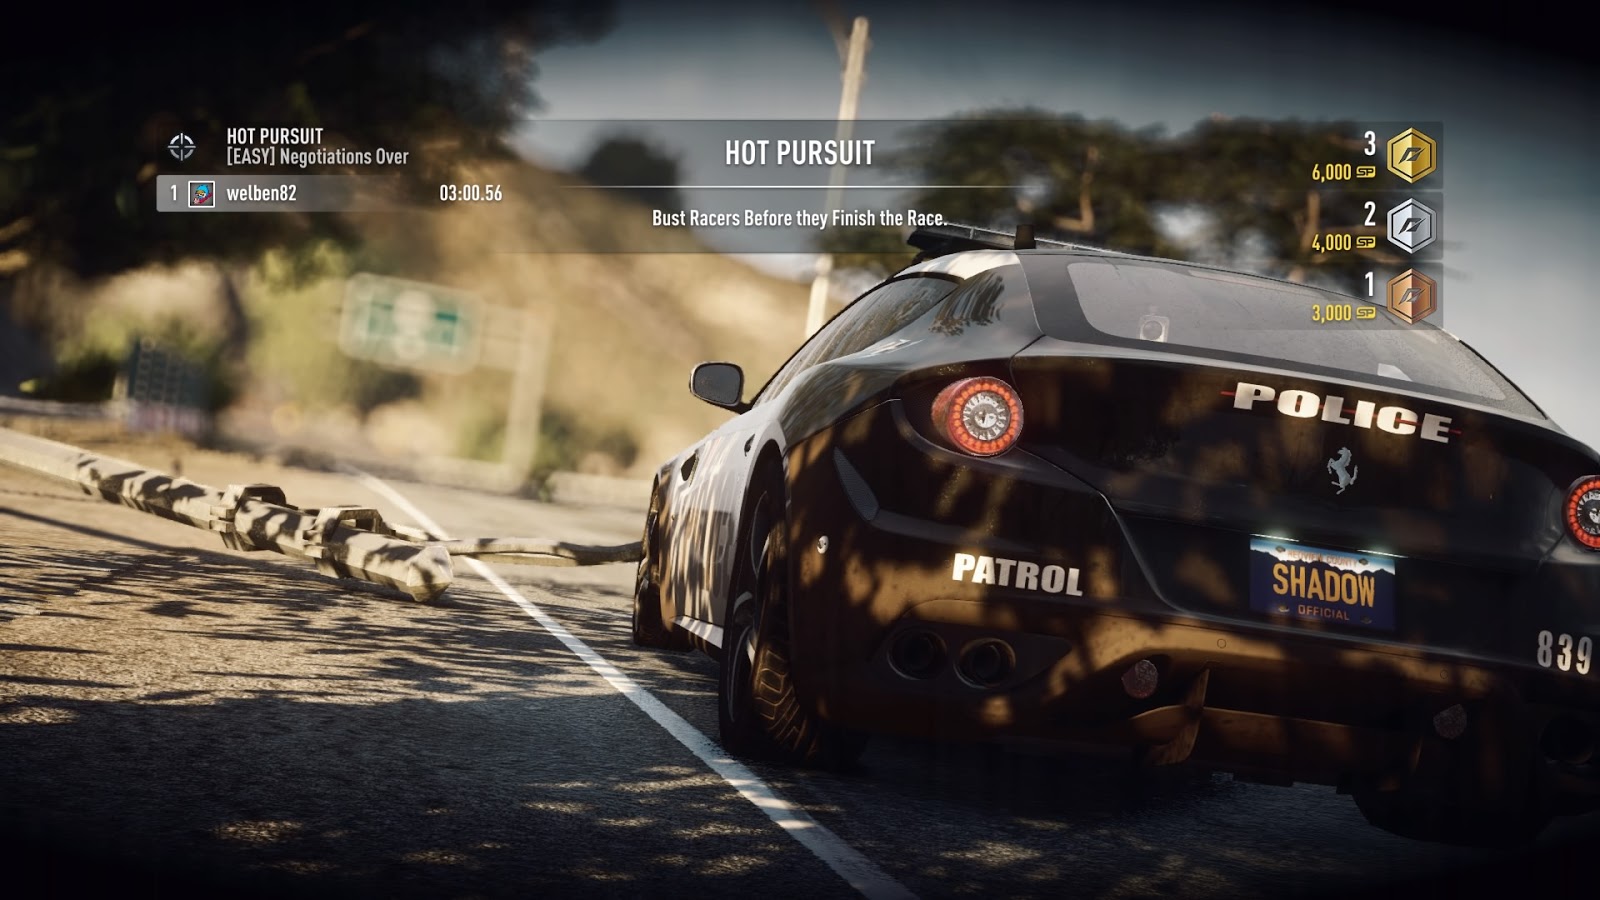 Jogo PS3 - Need for Speed Rivals (Mídia Física) - FF Games - Videogames  Retrô